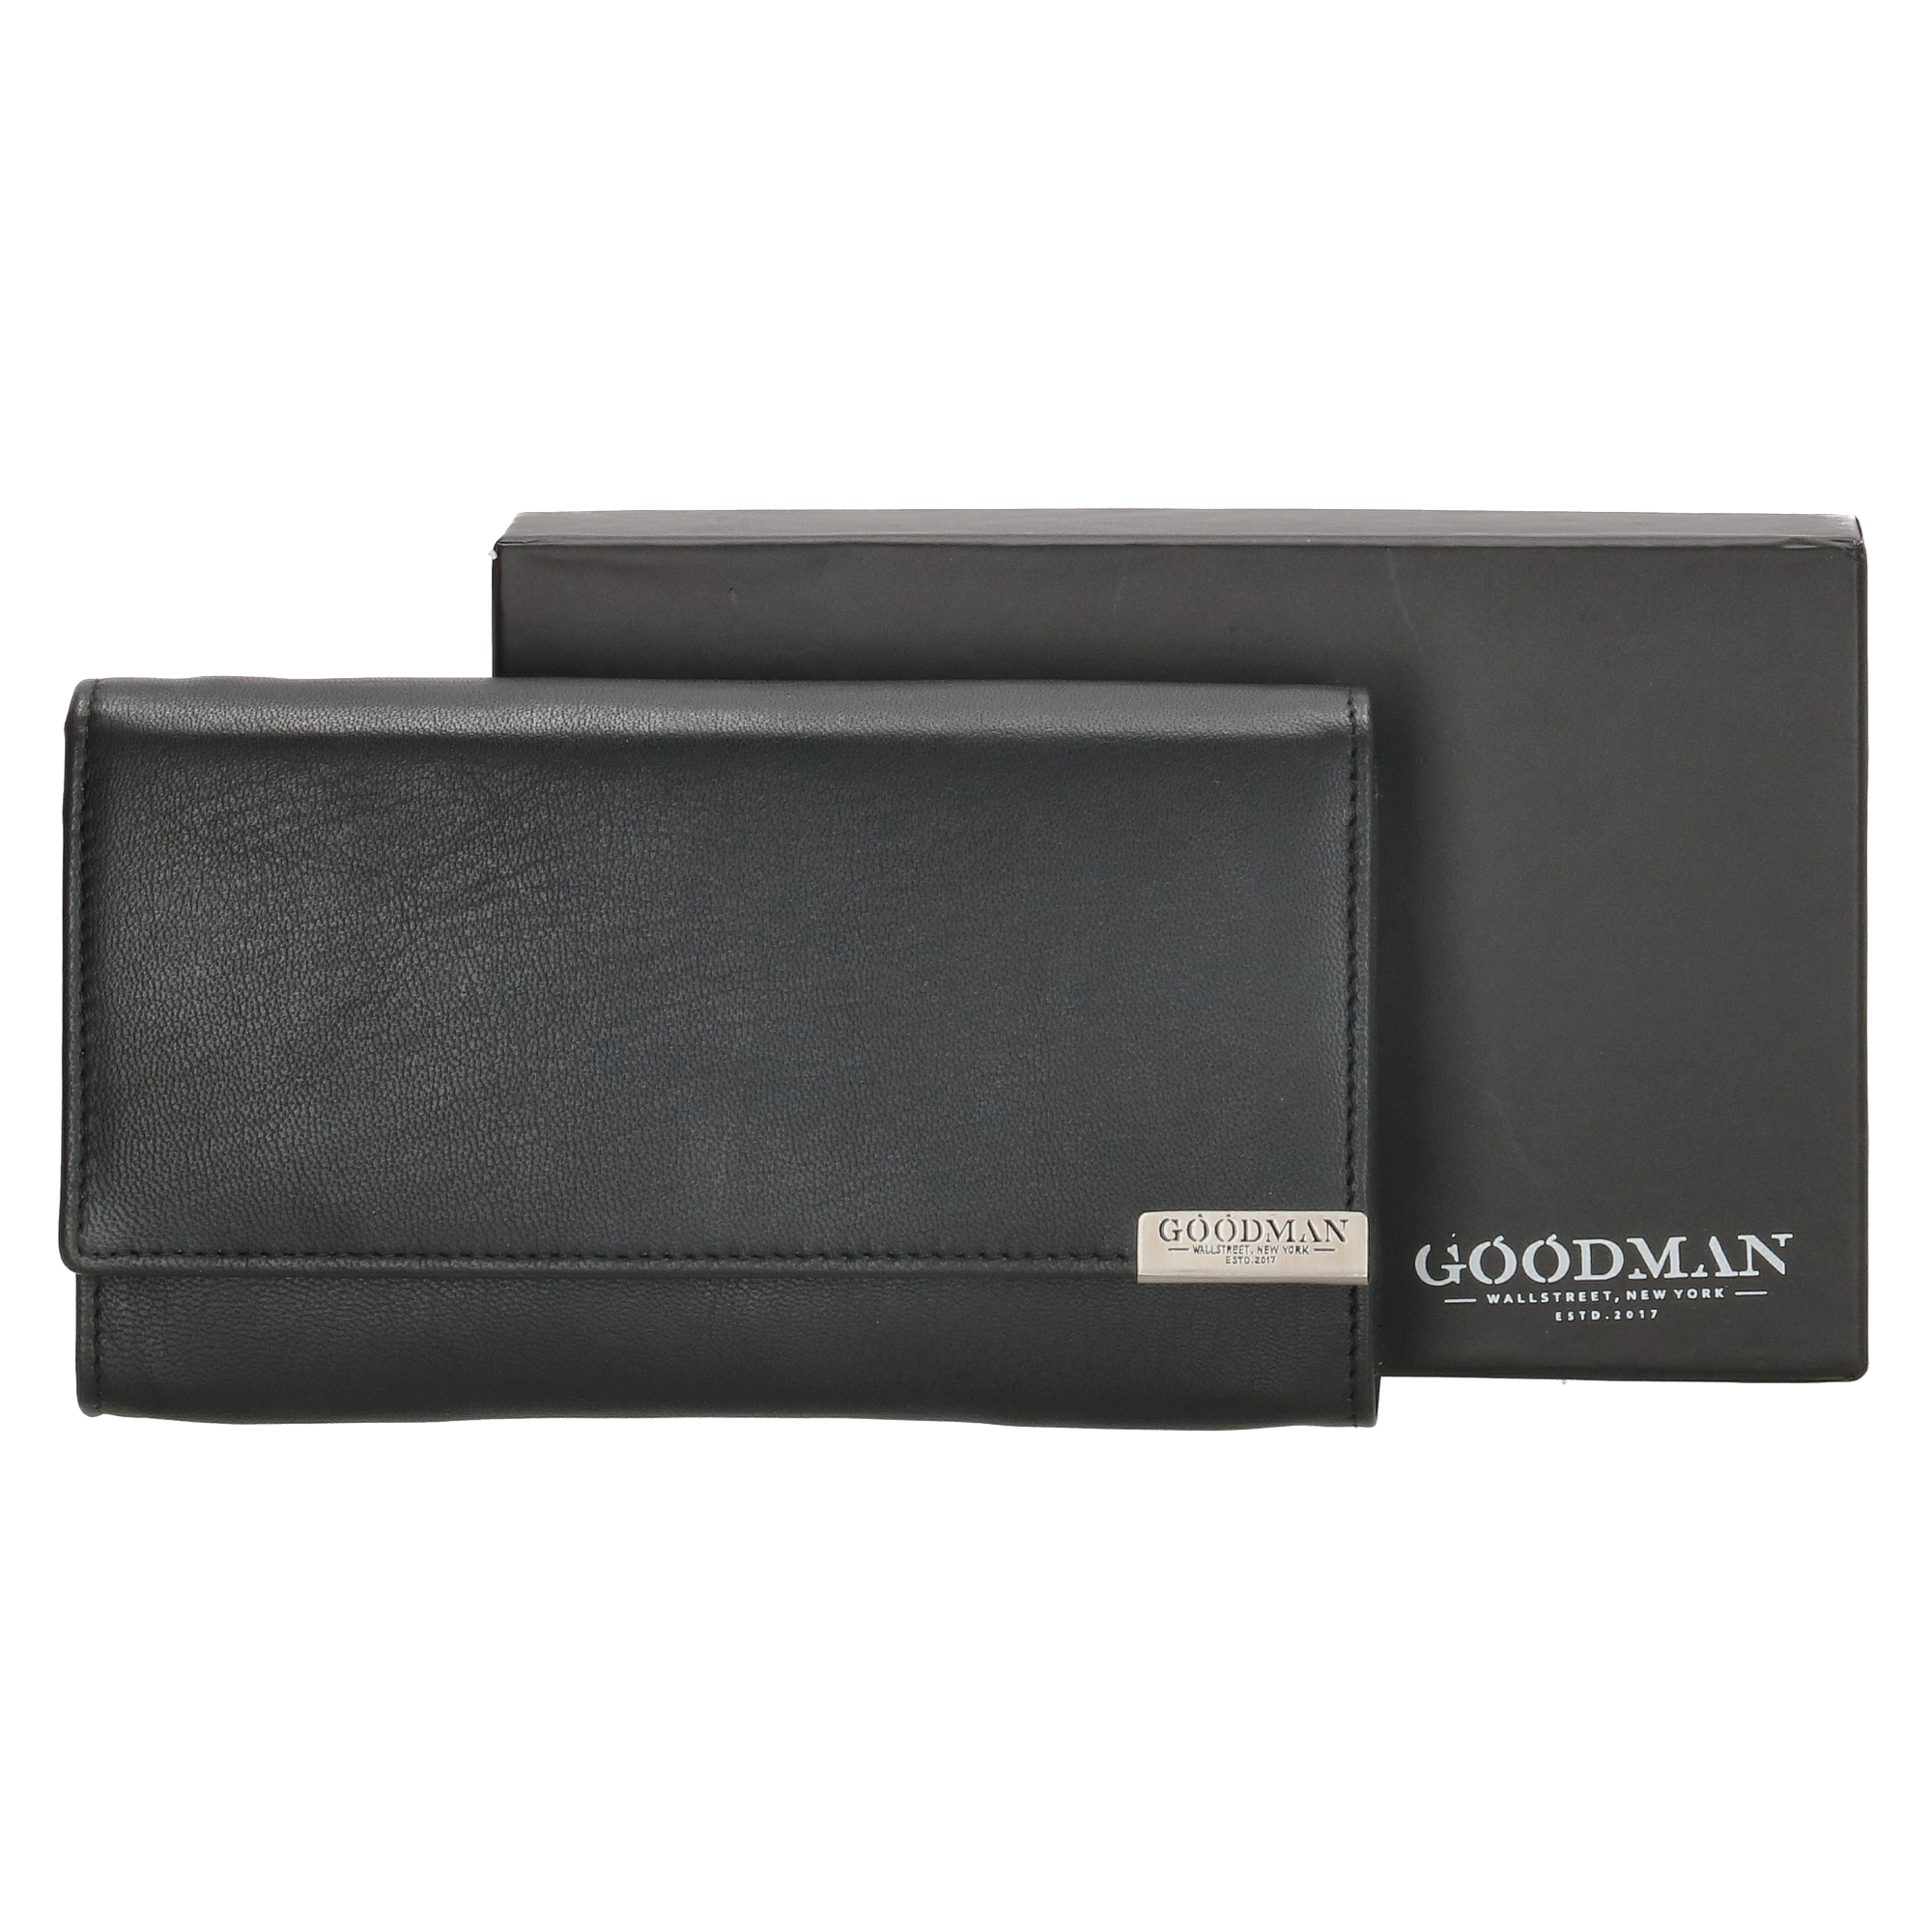 E-shop Luxusná kožená dámska peňaženka Goodman v krabičke - čierna